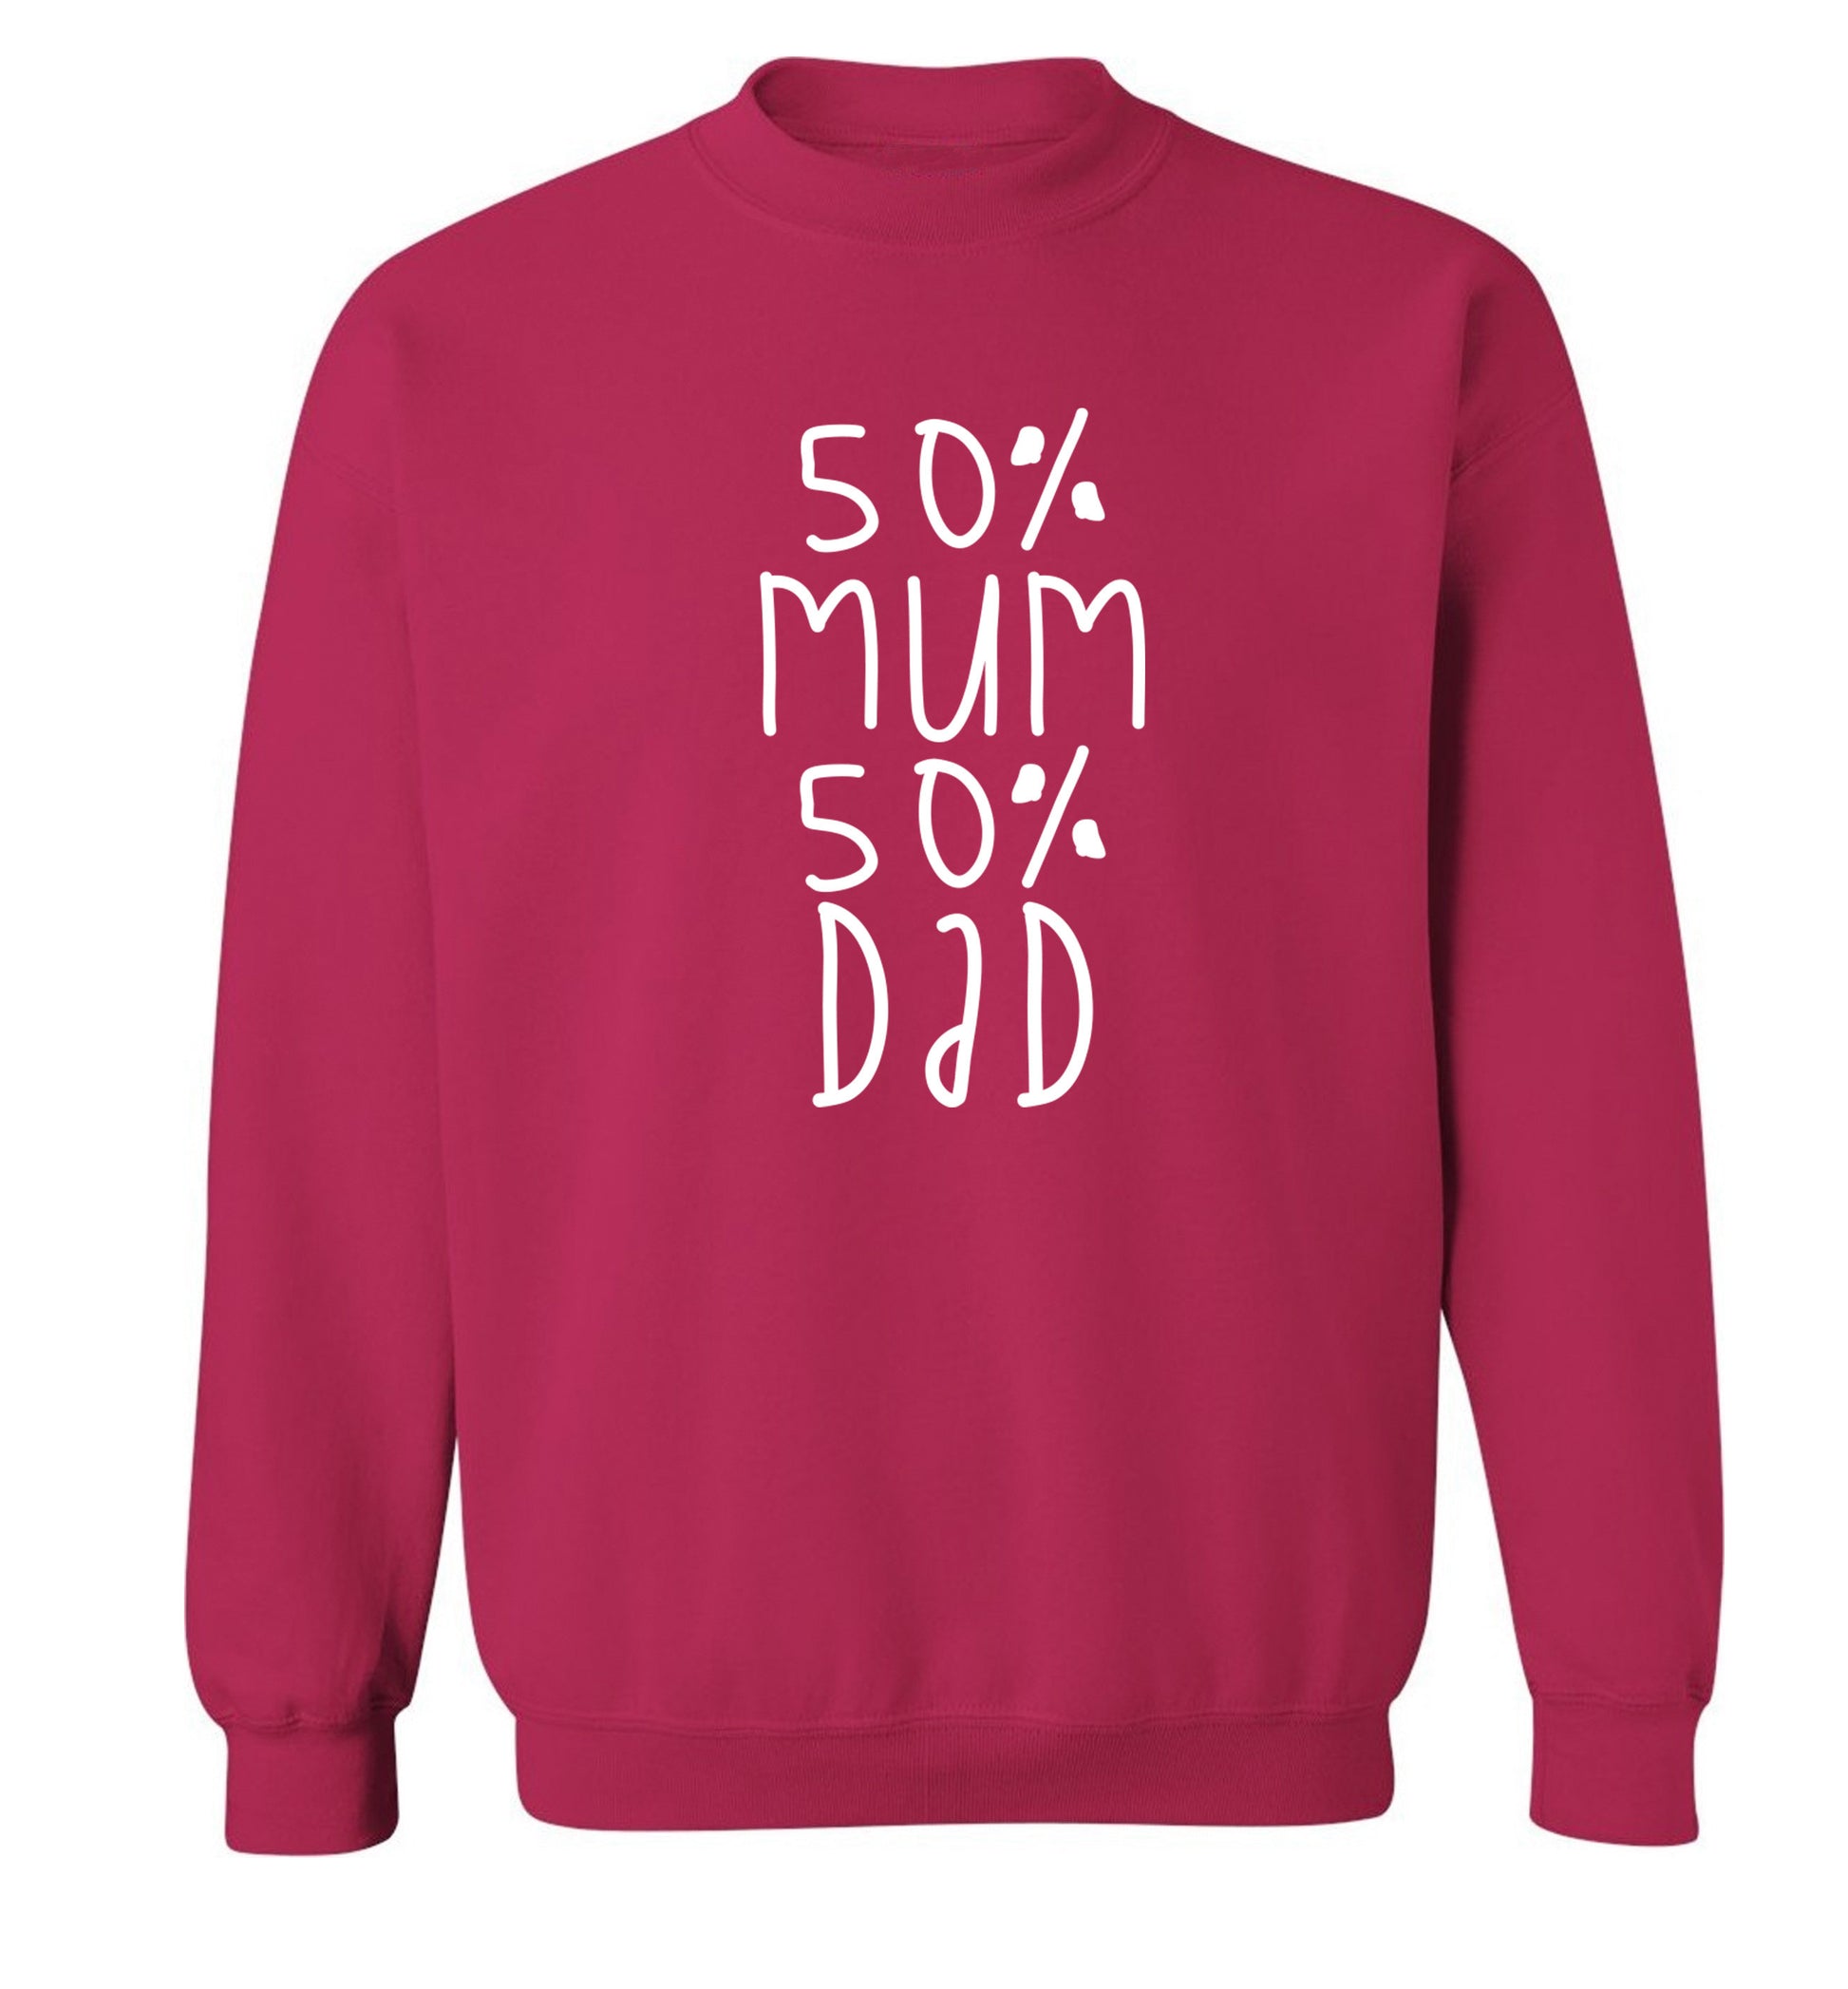 50% mum 50% dad Adult's unisex pink Sweater 2XL